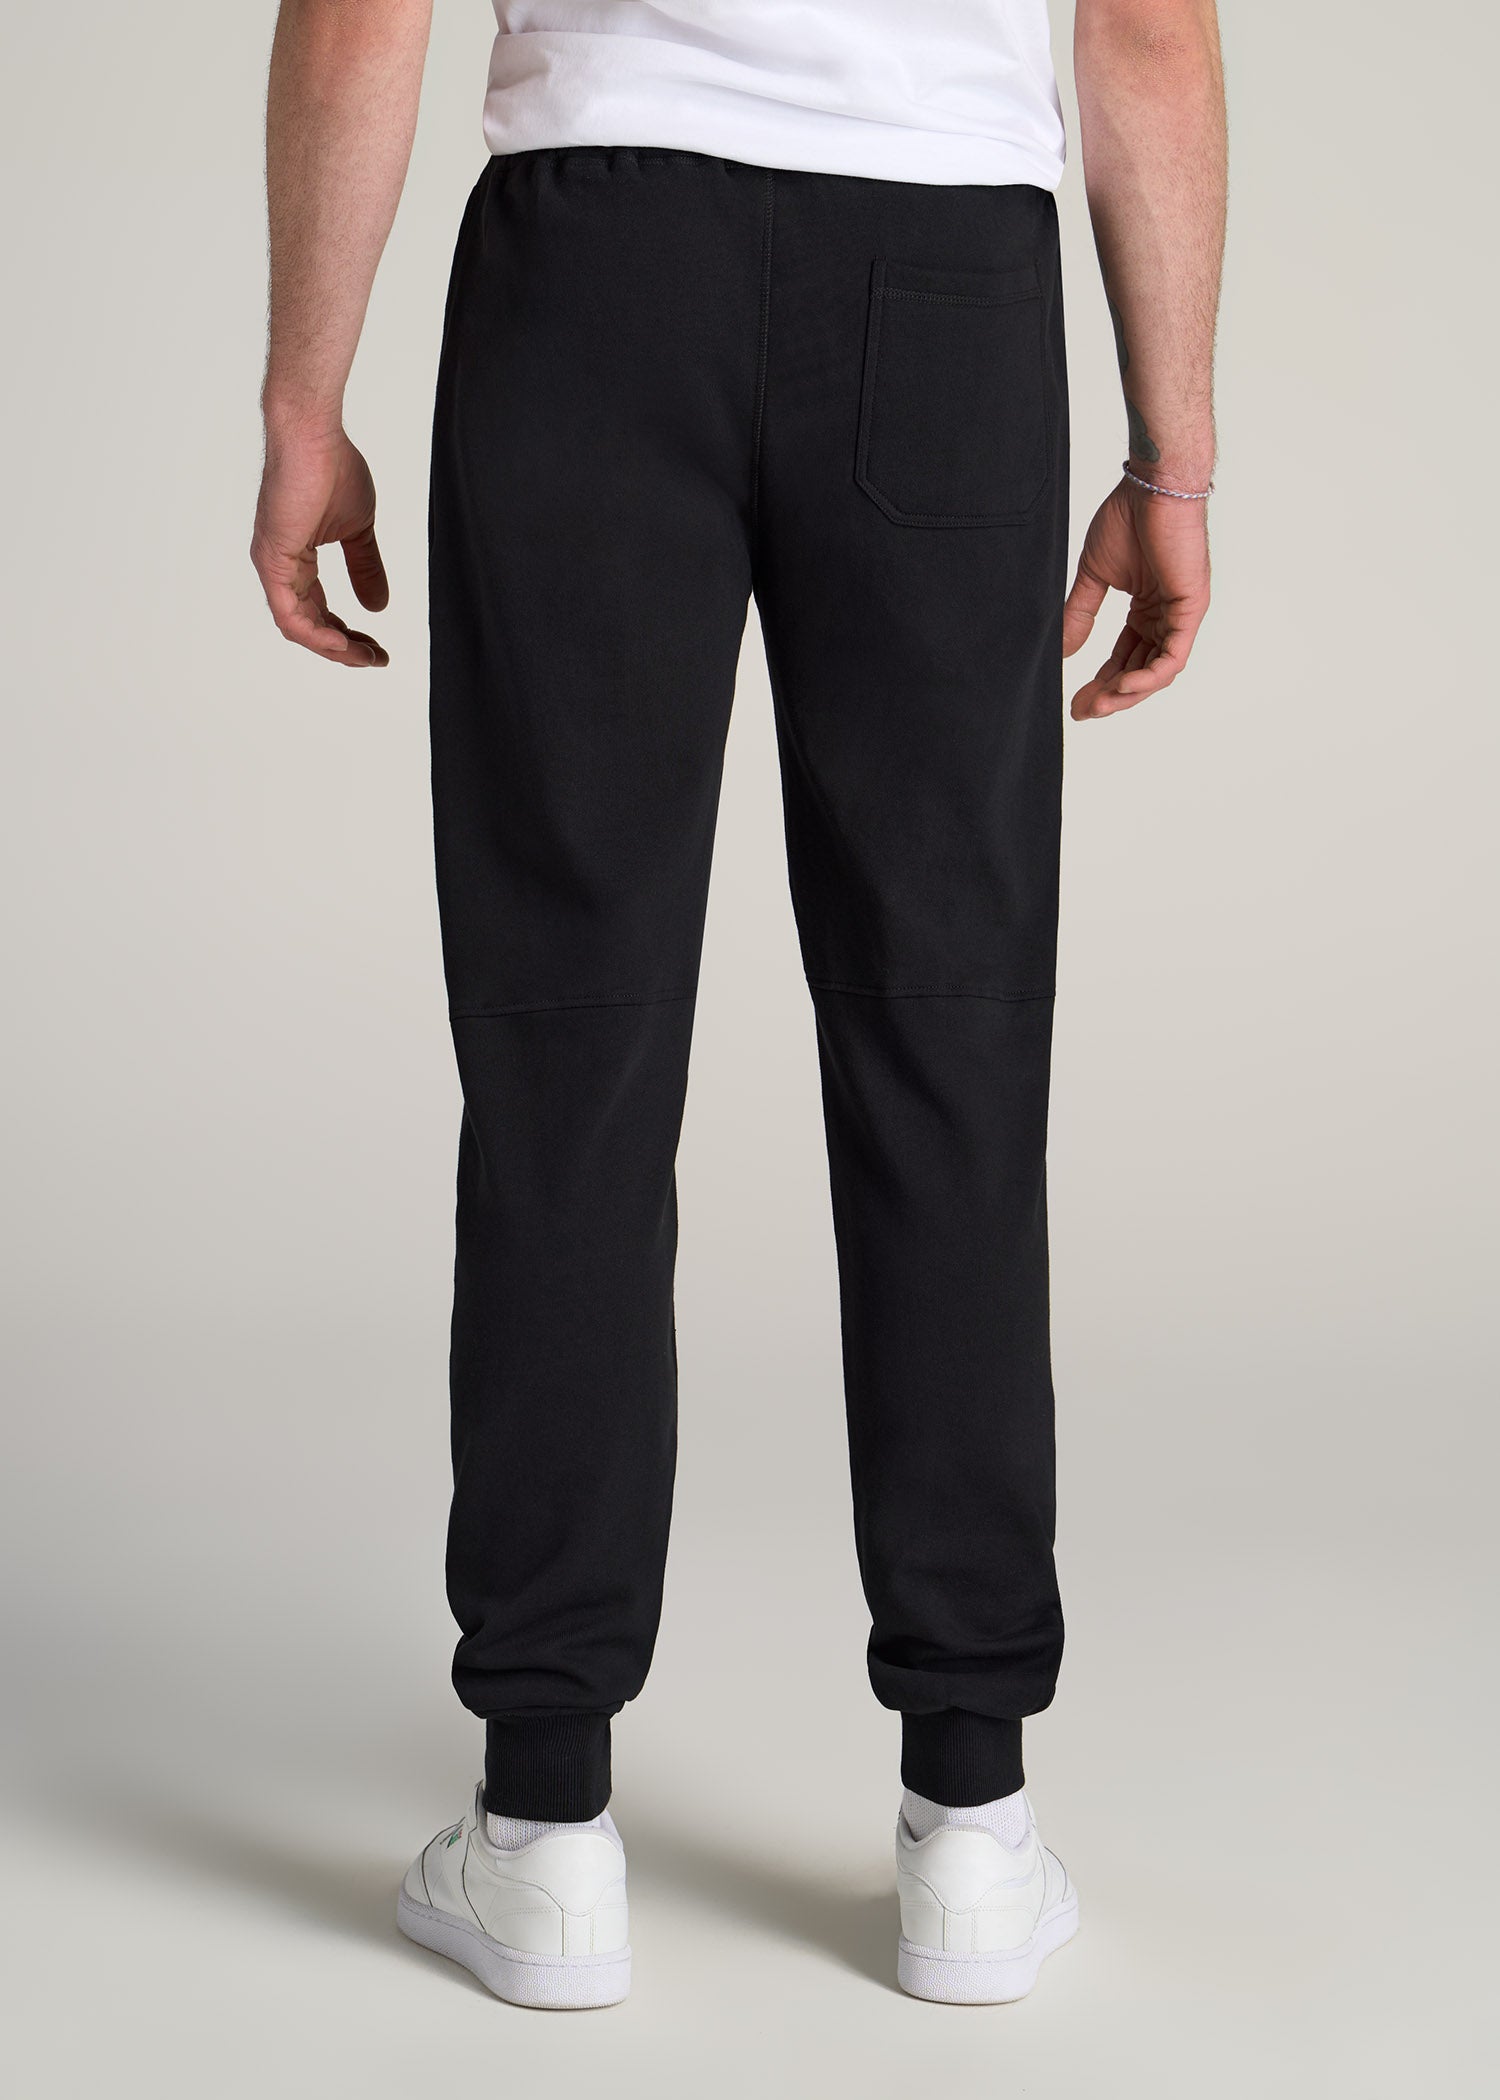 Nike Track Pants Men's Medium Black Drawstring Regular Fit Ankle Zip  Straight